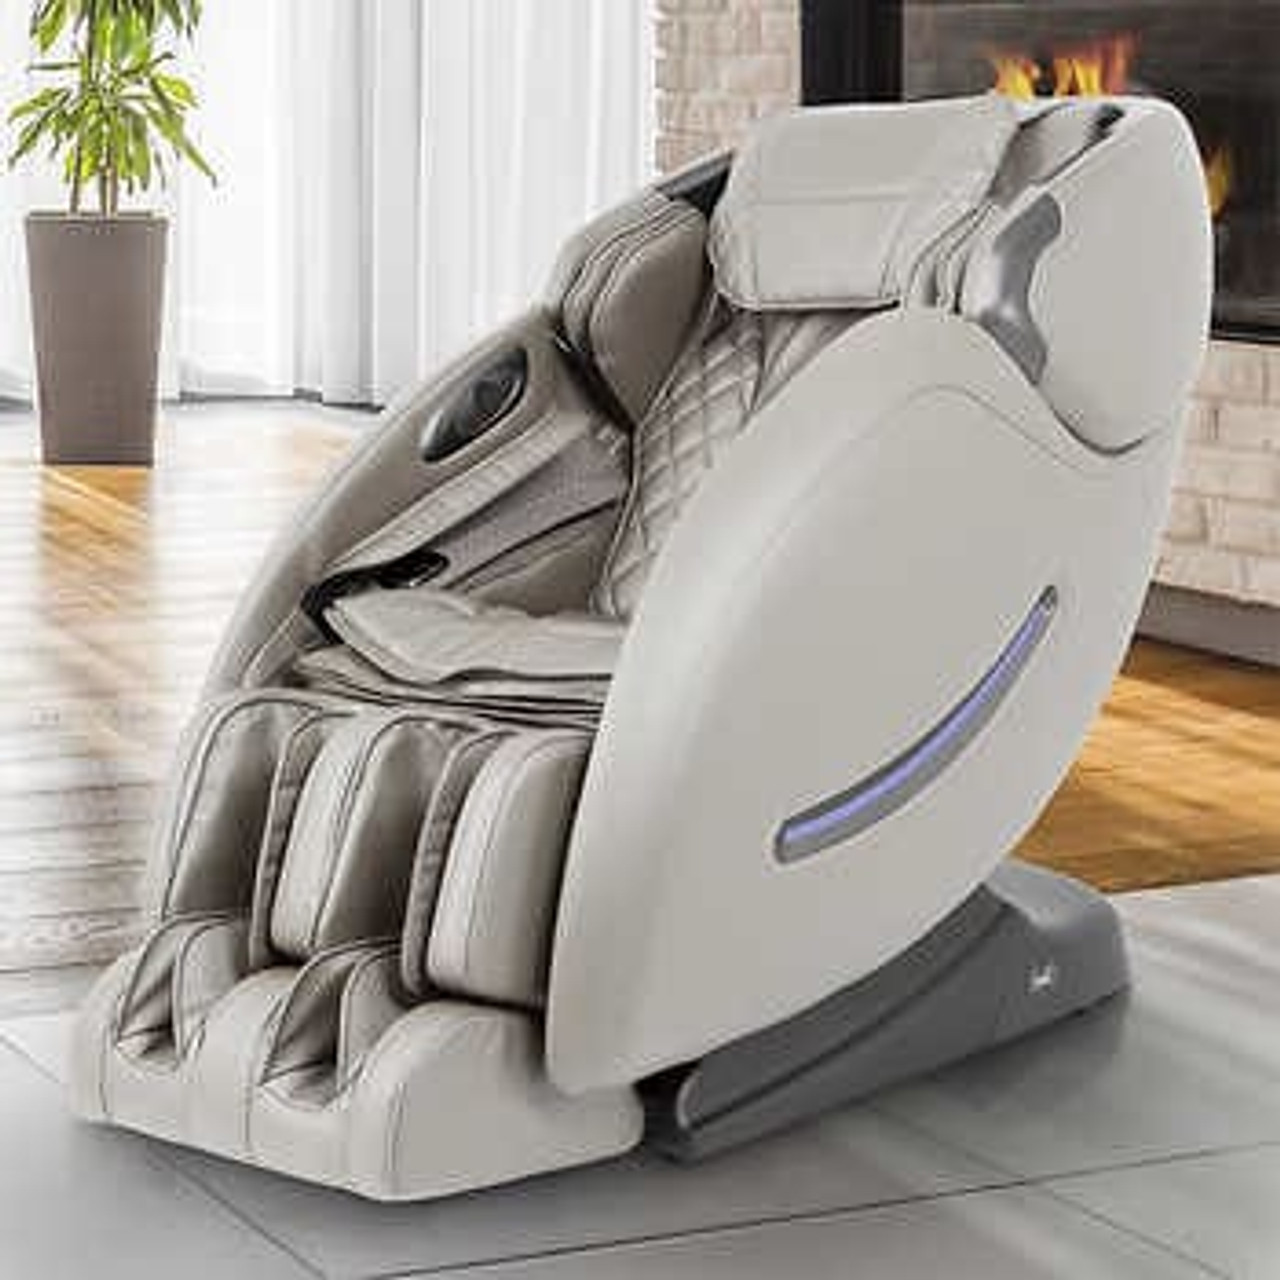 OS-4000XT Massage Chair by Osaki